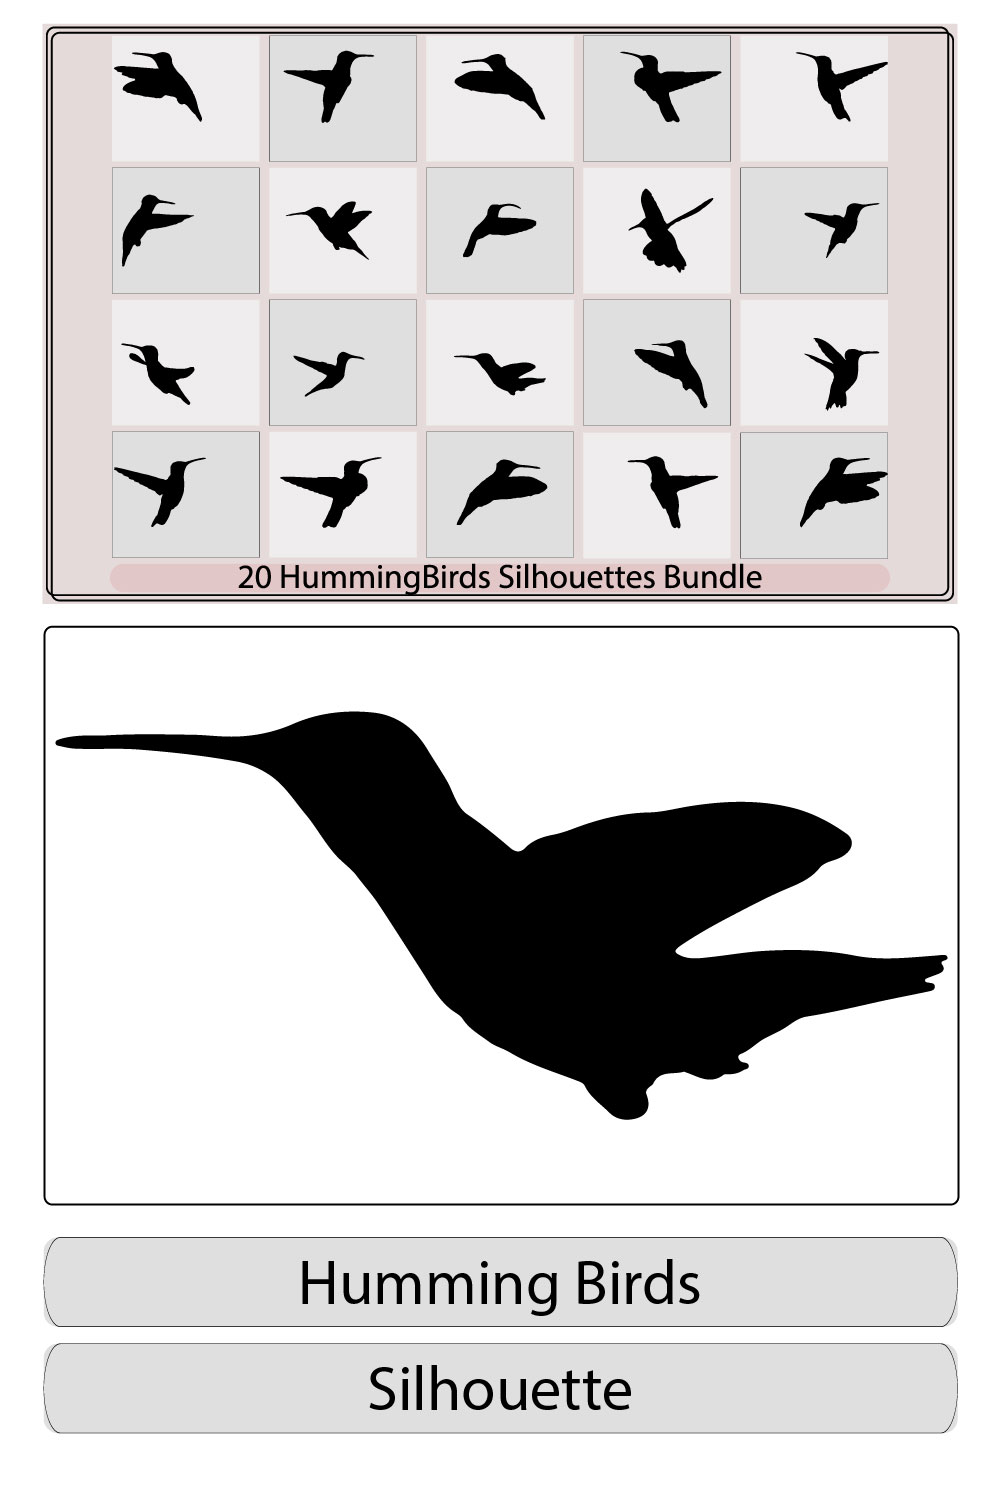 hummingbird silhouettes,humming bird silhouetteHumming Colibri Bird Icon Silhouette Illustration,Vector Collection of humming Bird Silhouettes pinterest preview image.